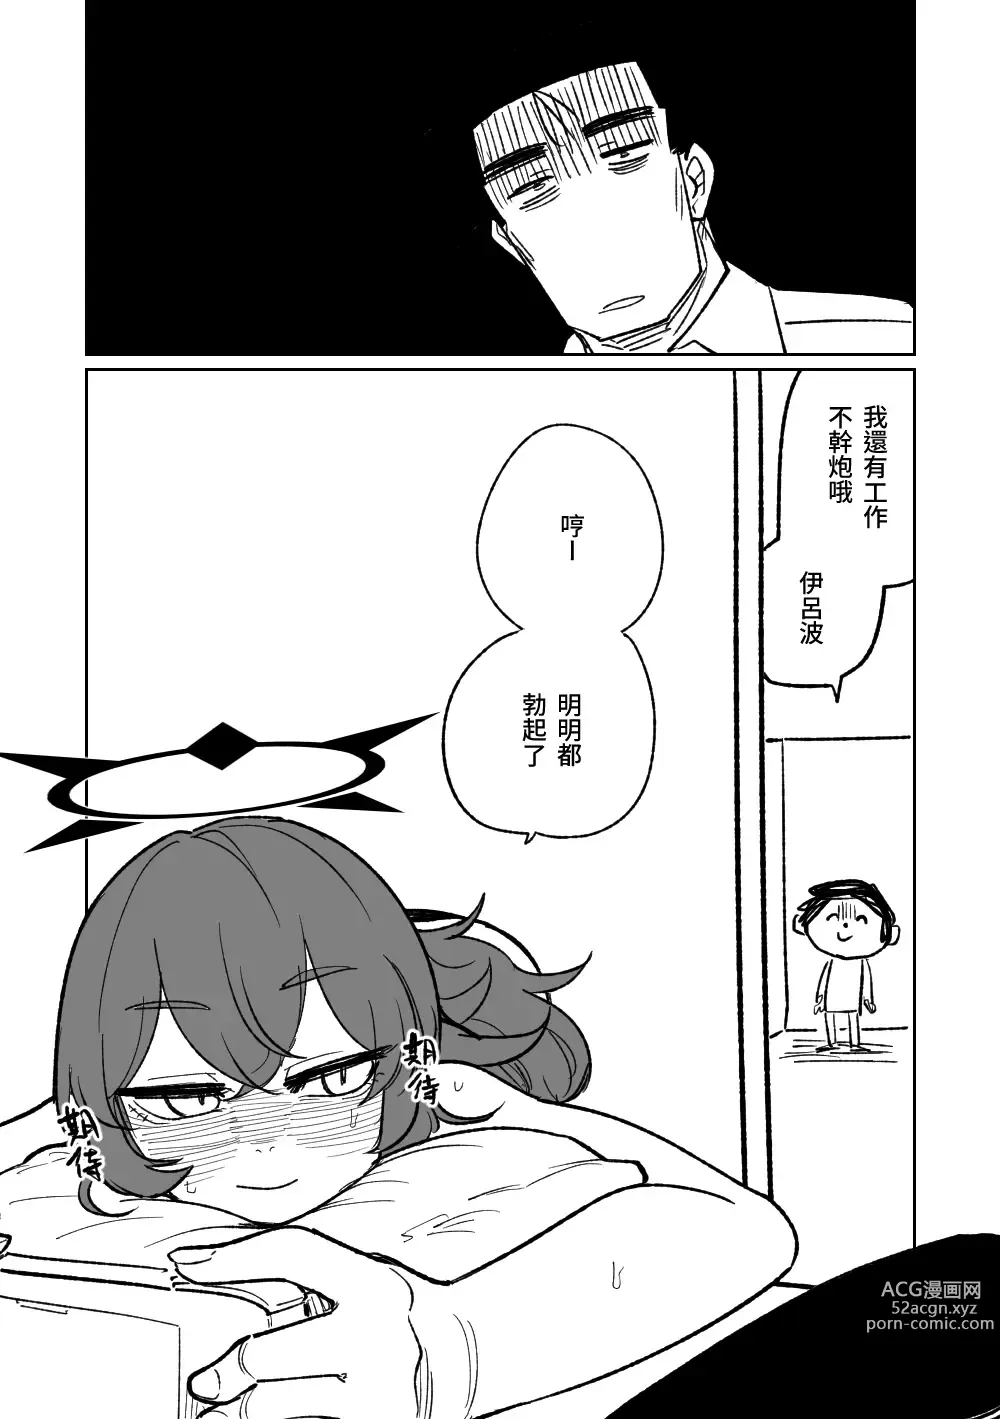 Page 6 of doujinshi 壁尻